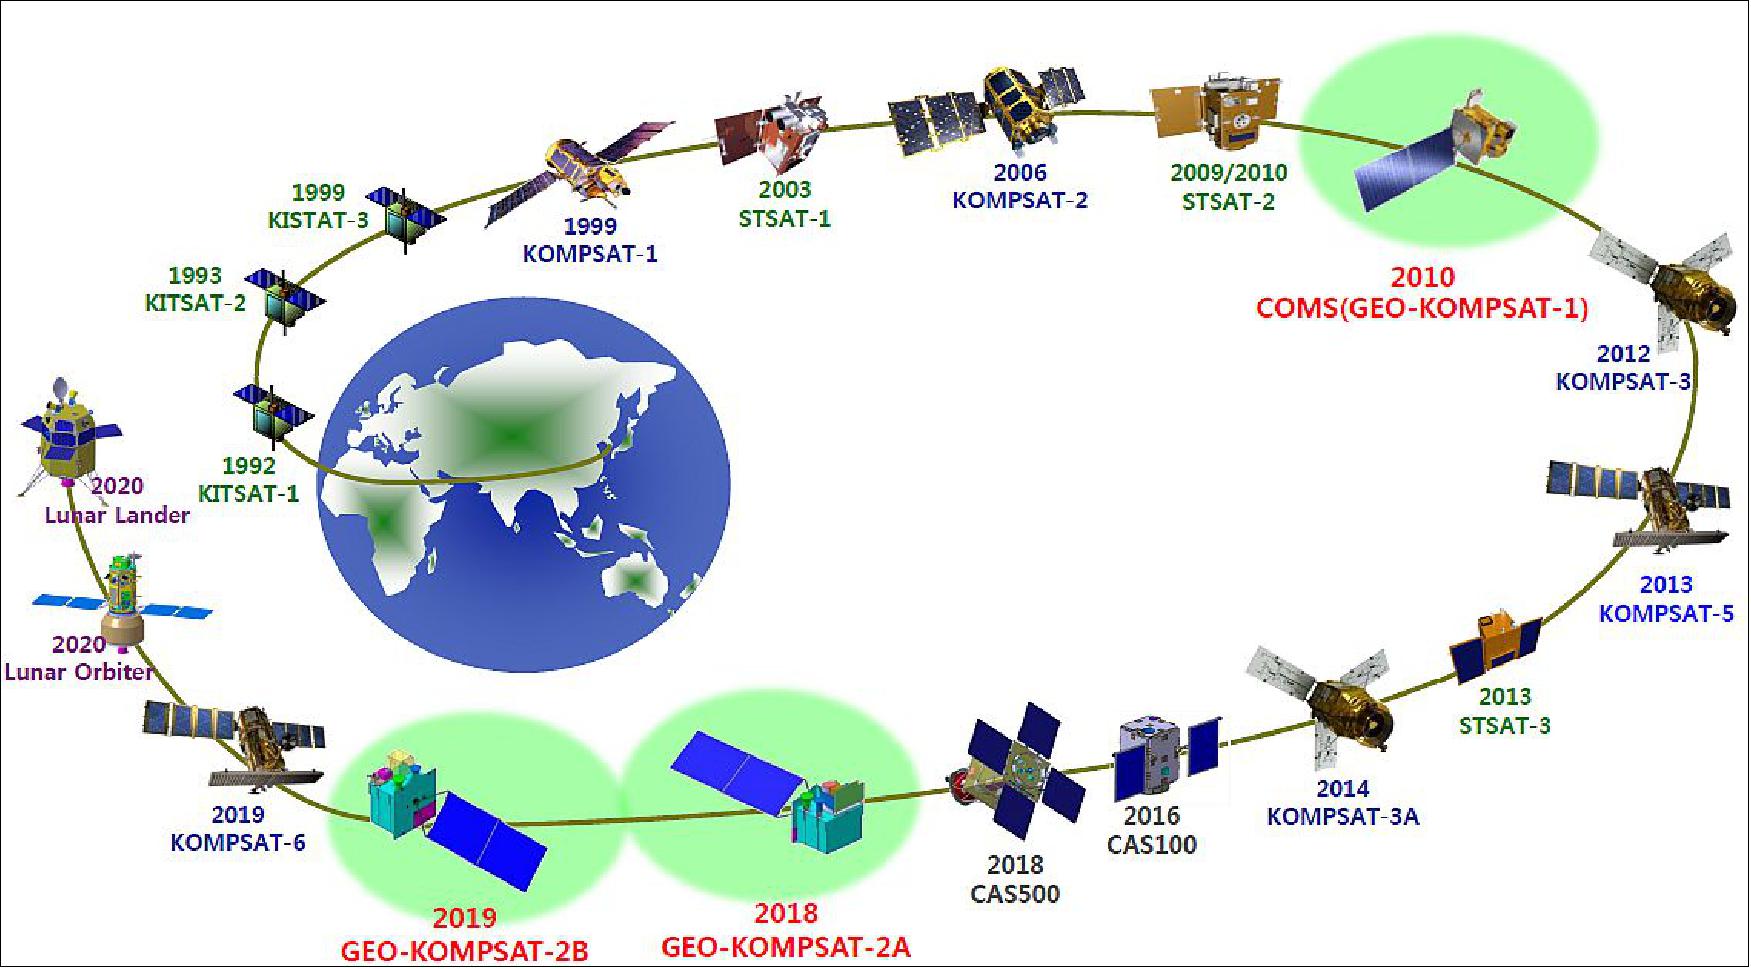 Figure 2: National Satellite Development Plan (image credit: KARI) 4)